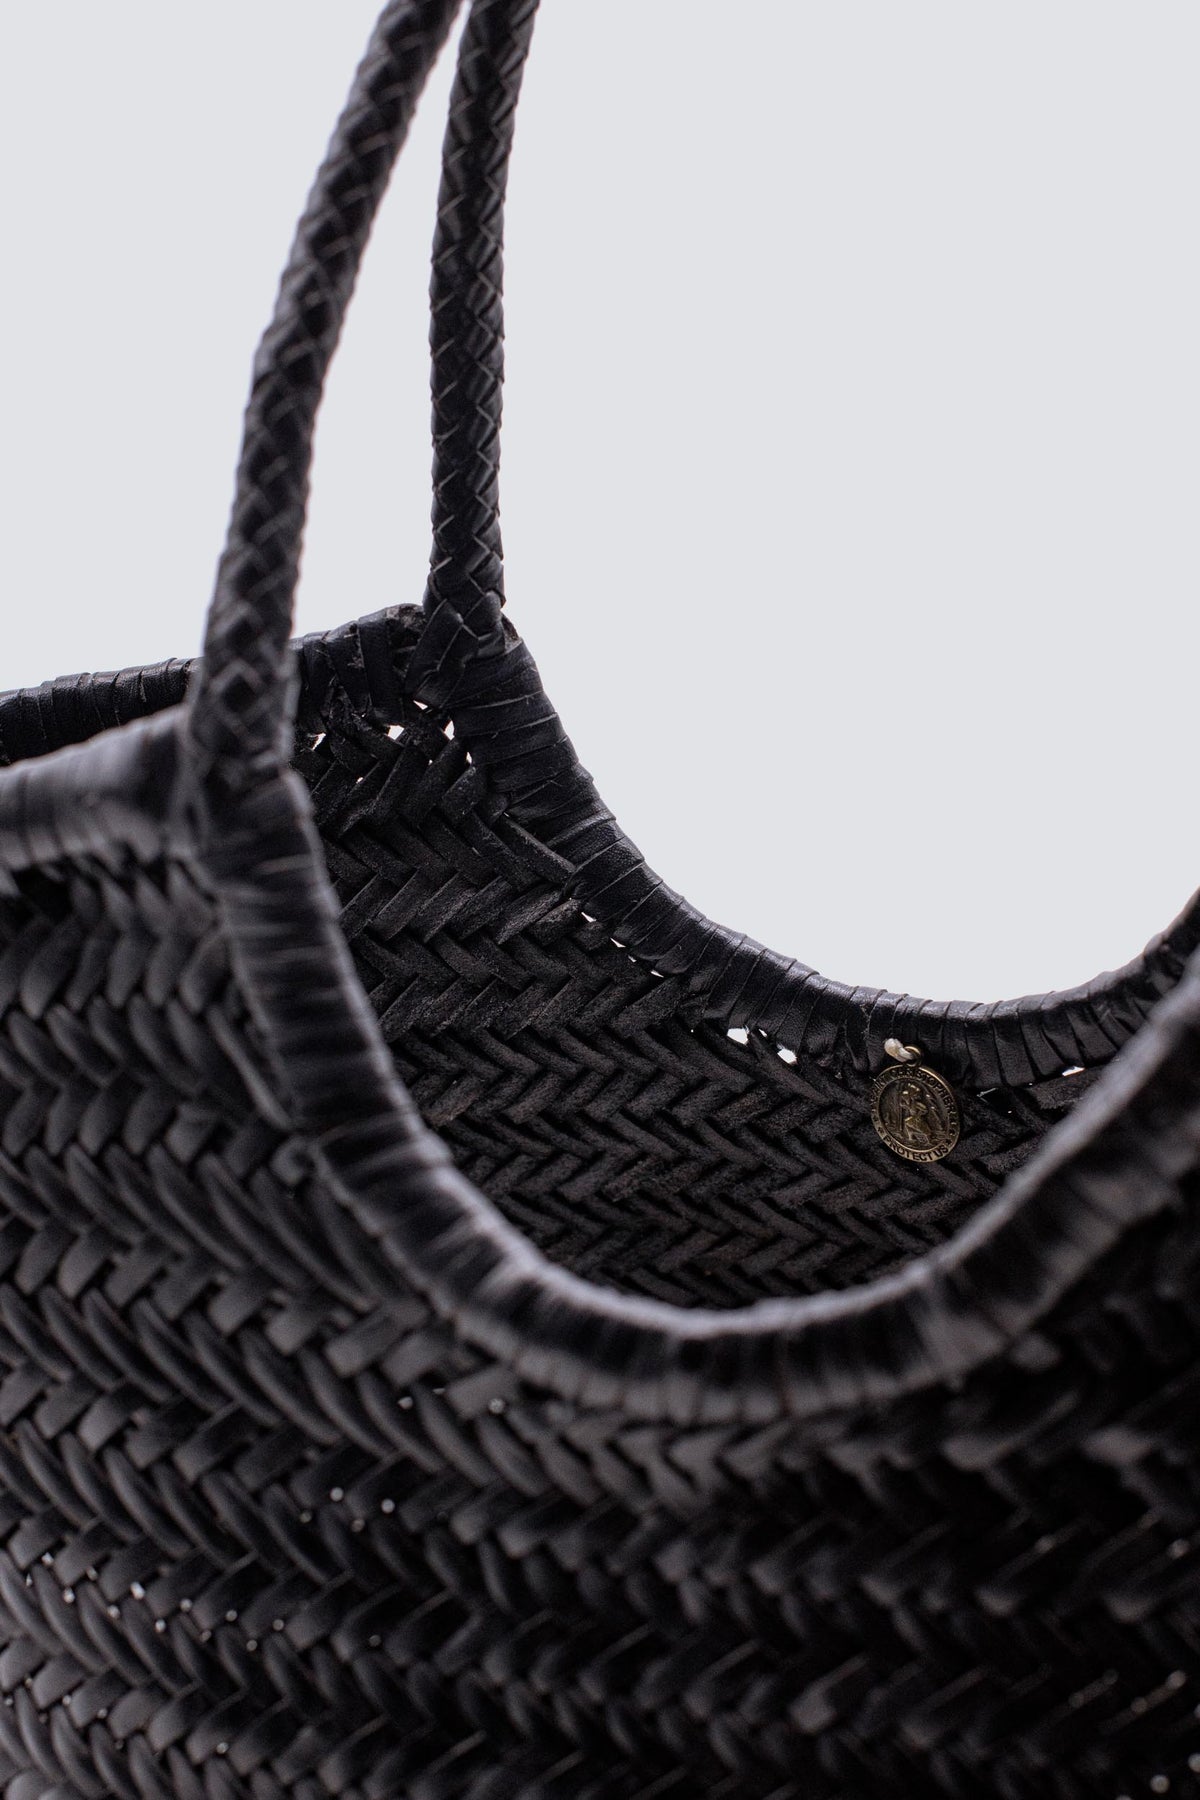 DRAGON DIFFUSION Big Nantucket woven leather basket bag - ShopStyle